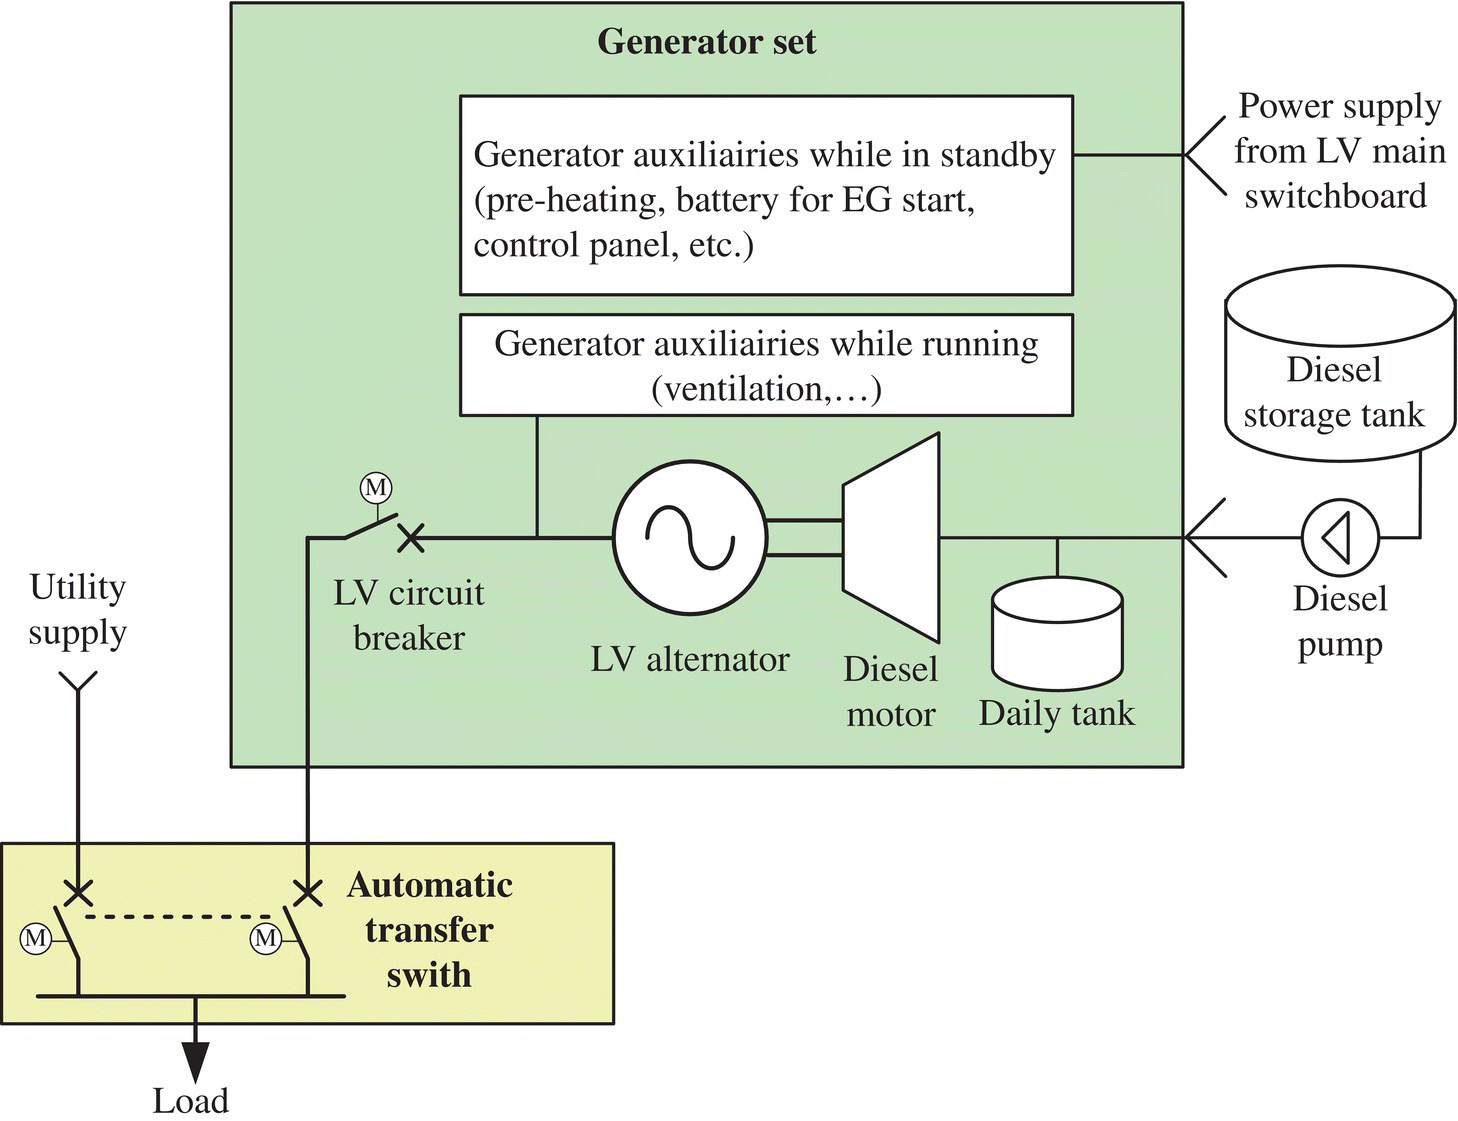 Schematic illustration of diesel generator backup architecture.